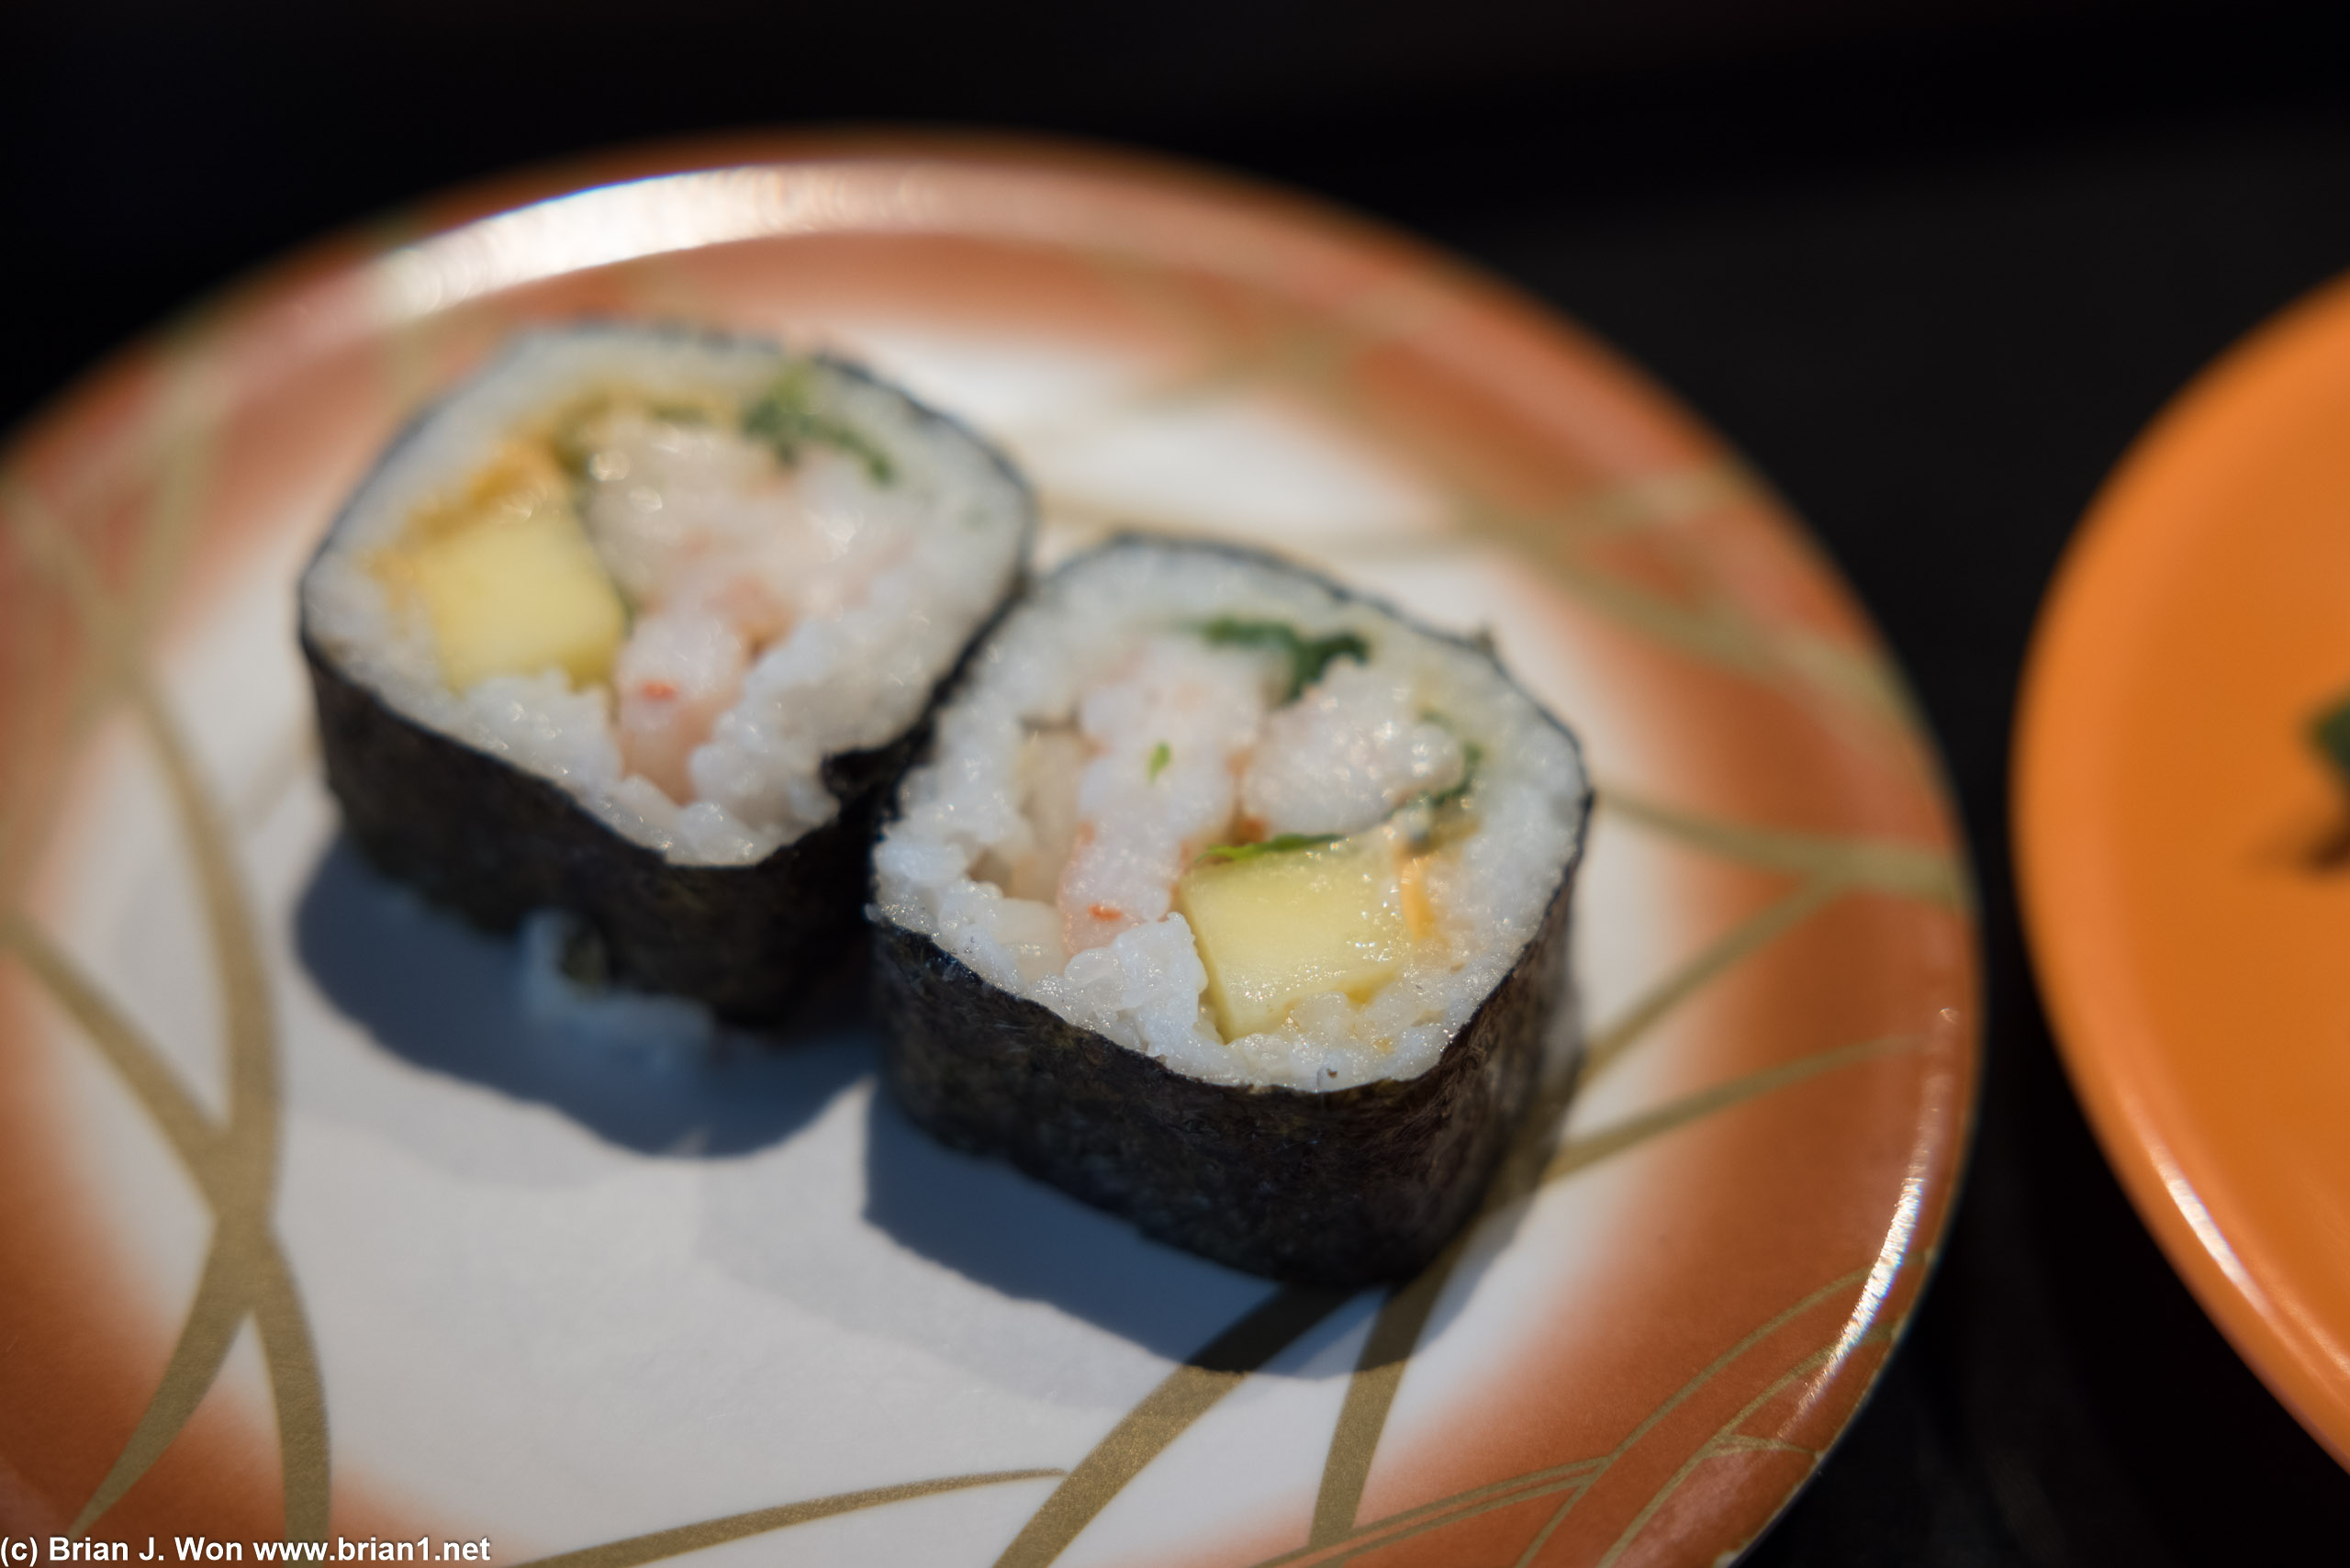 Conveyor belt sushi is rarely a good idea.